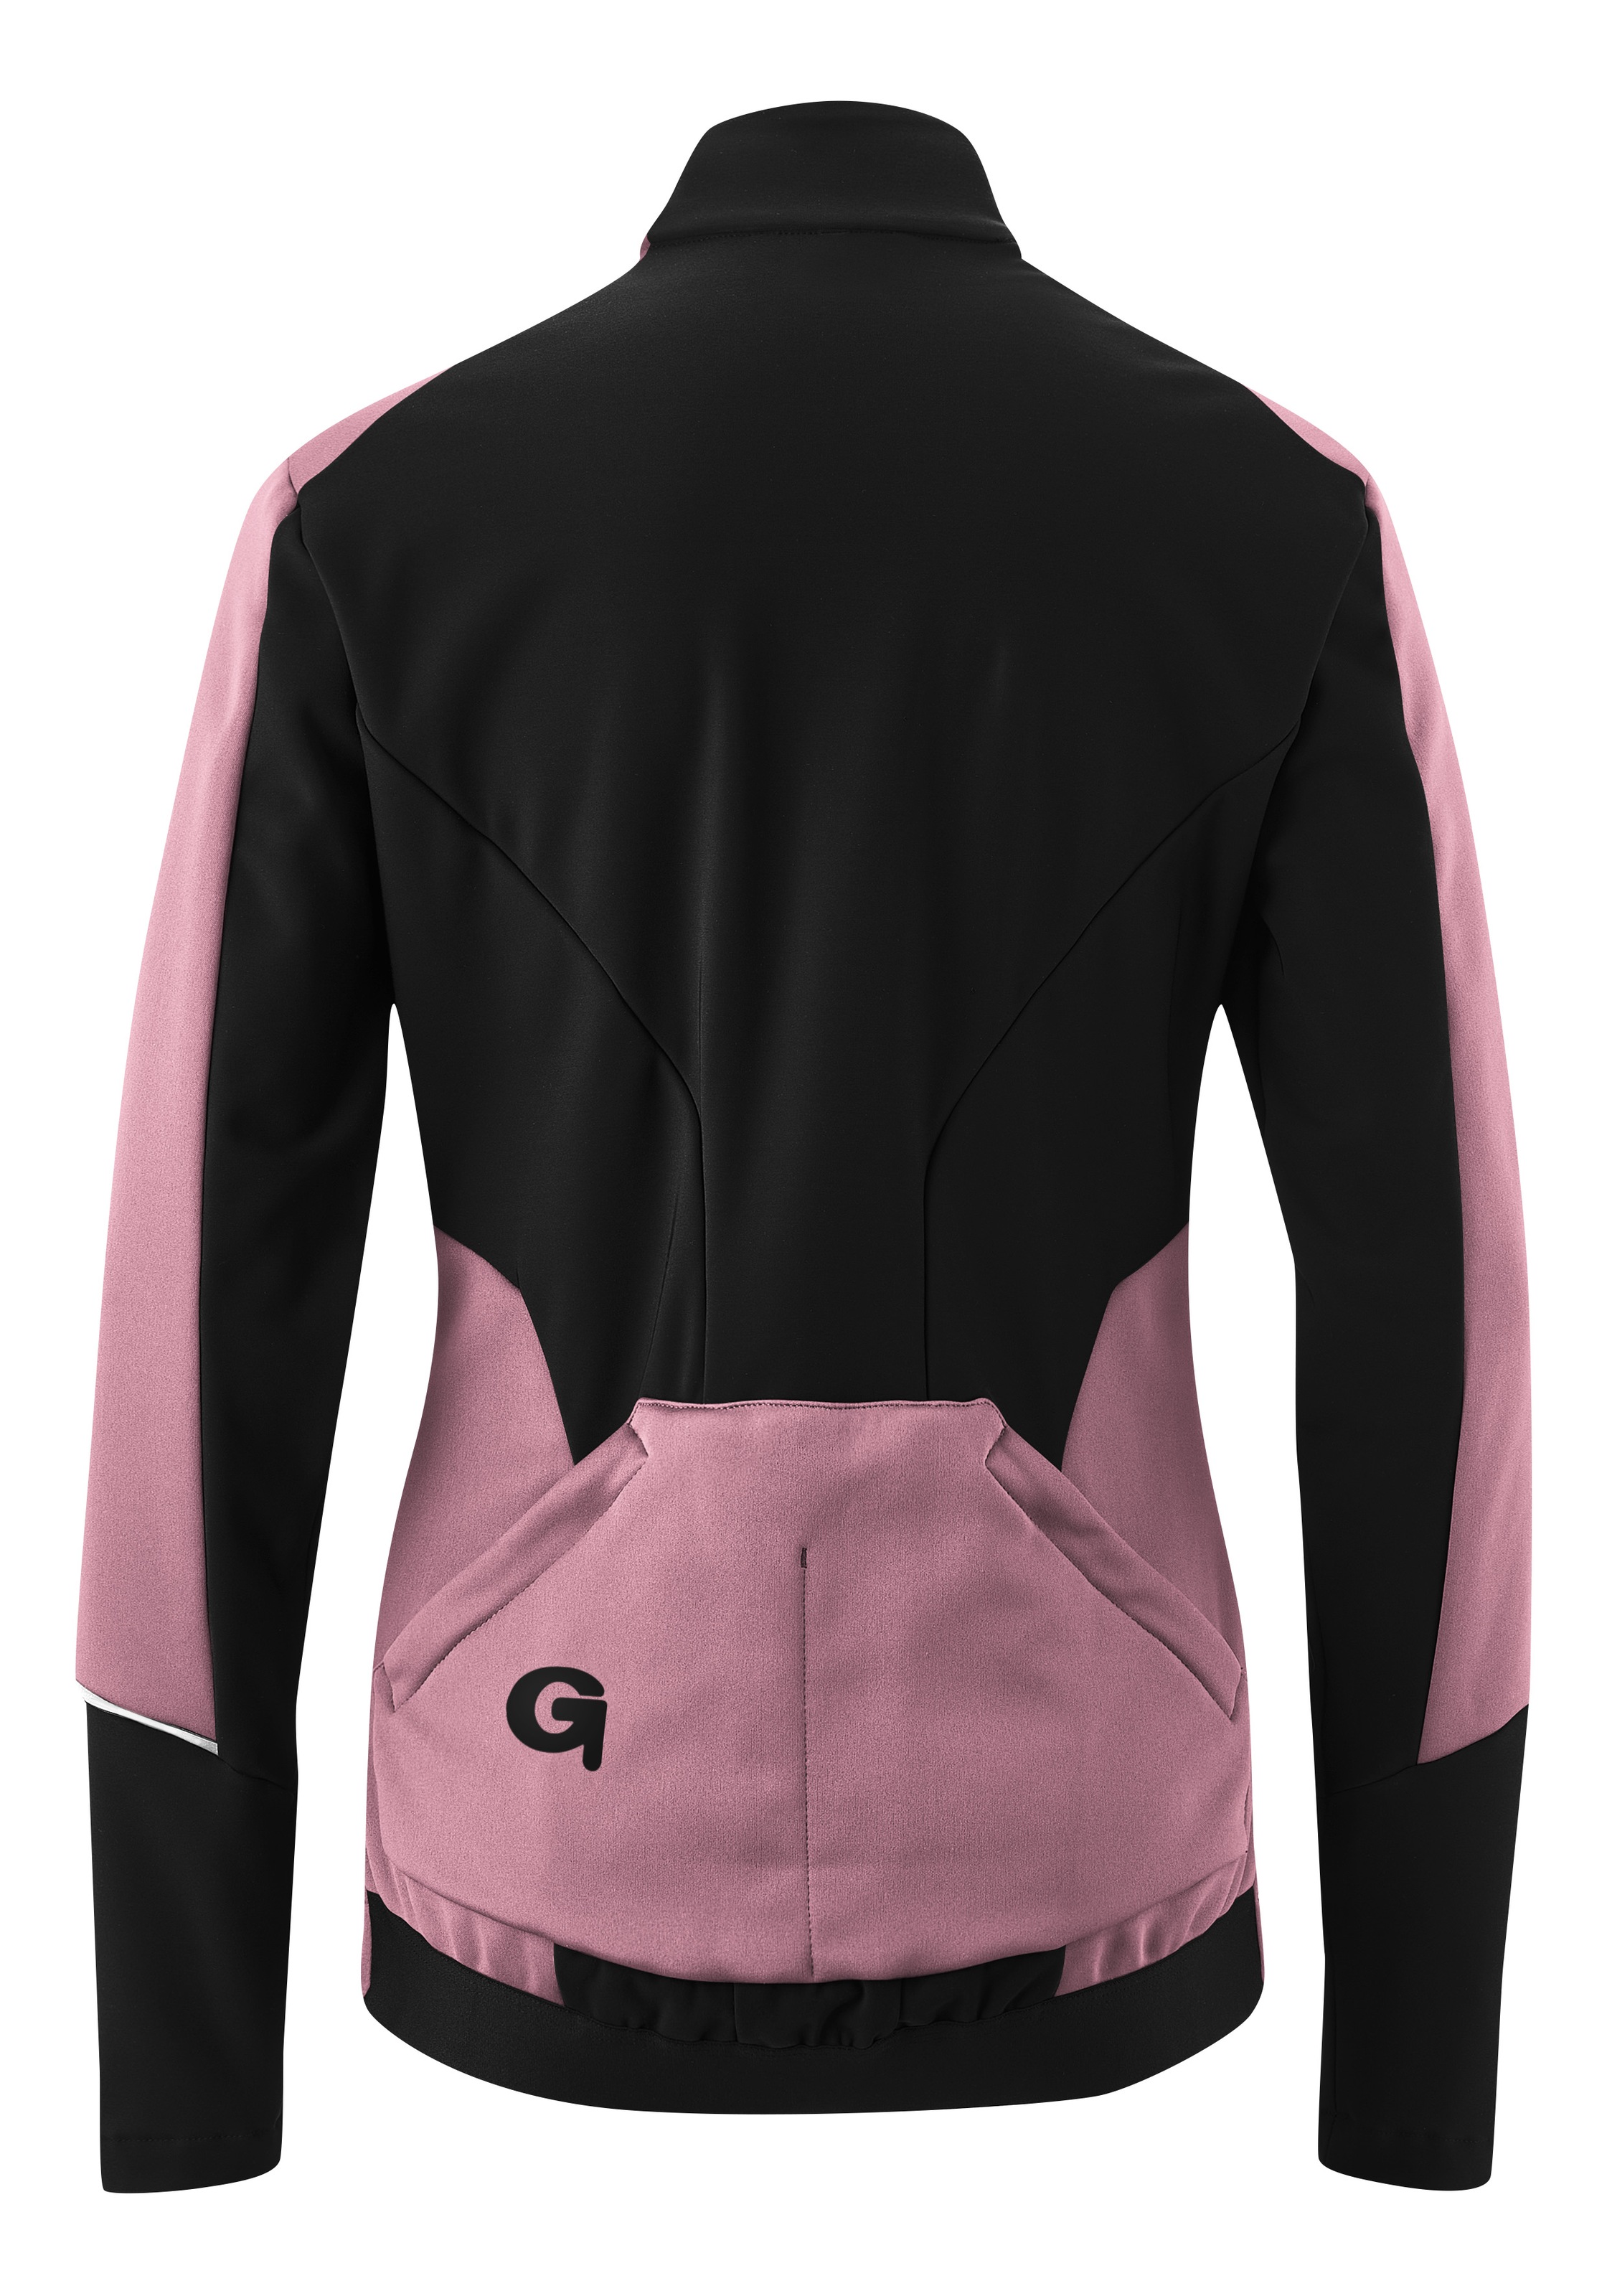 Damen Softshell-Jacke, wasserabweisend »FURIANI«, atmungsaktiv OTTOversand Fahrradjacke Gonso bei Windjacke und